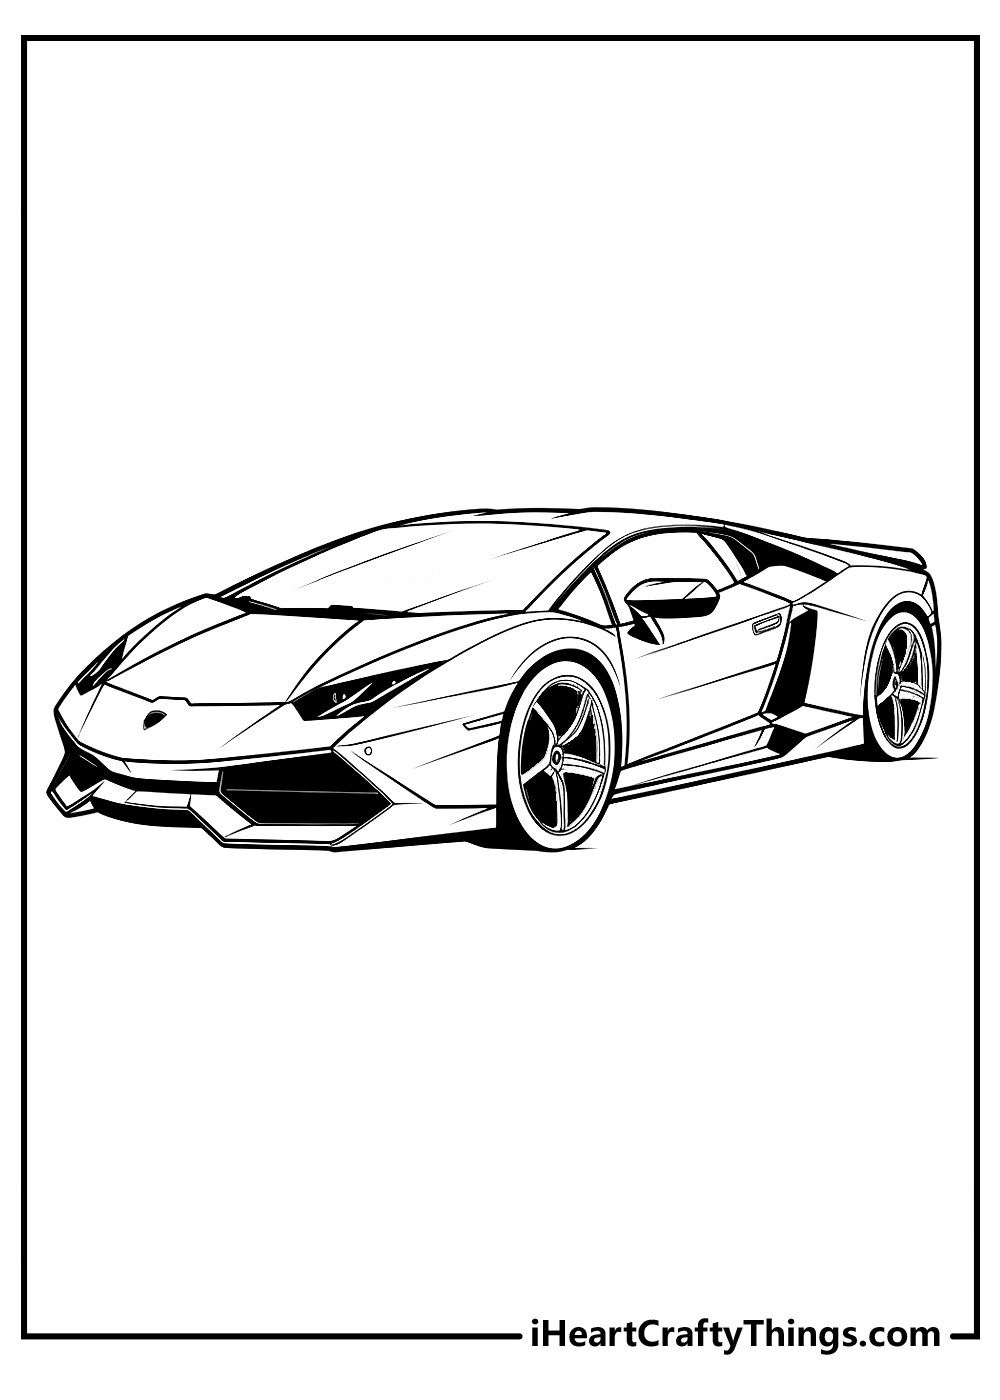 Lamborghini coloring pages free printables